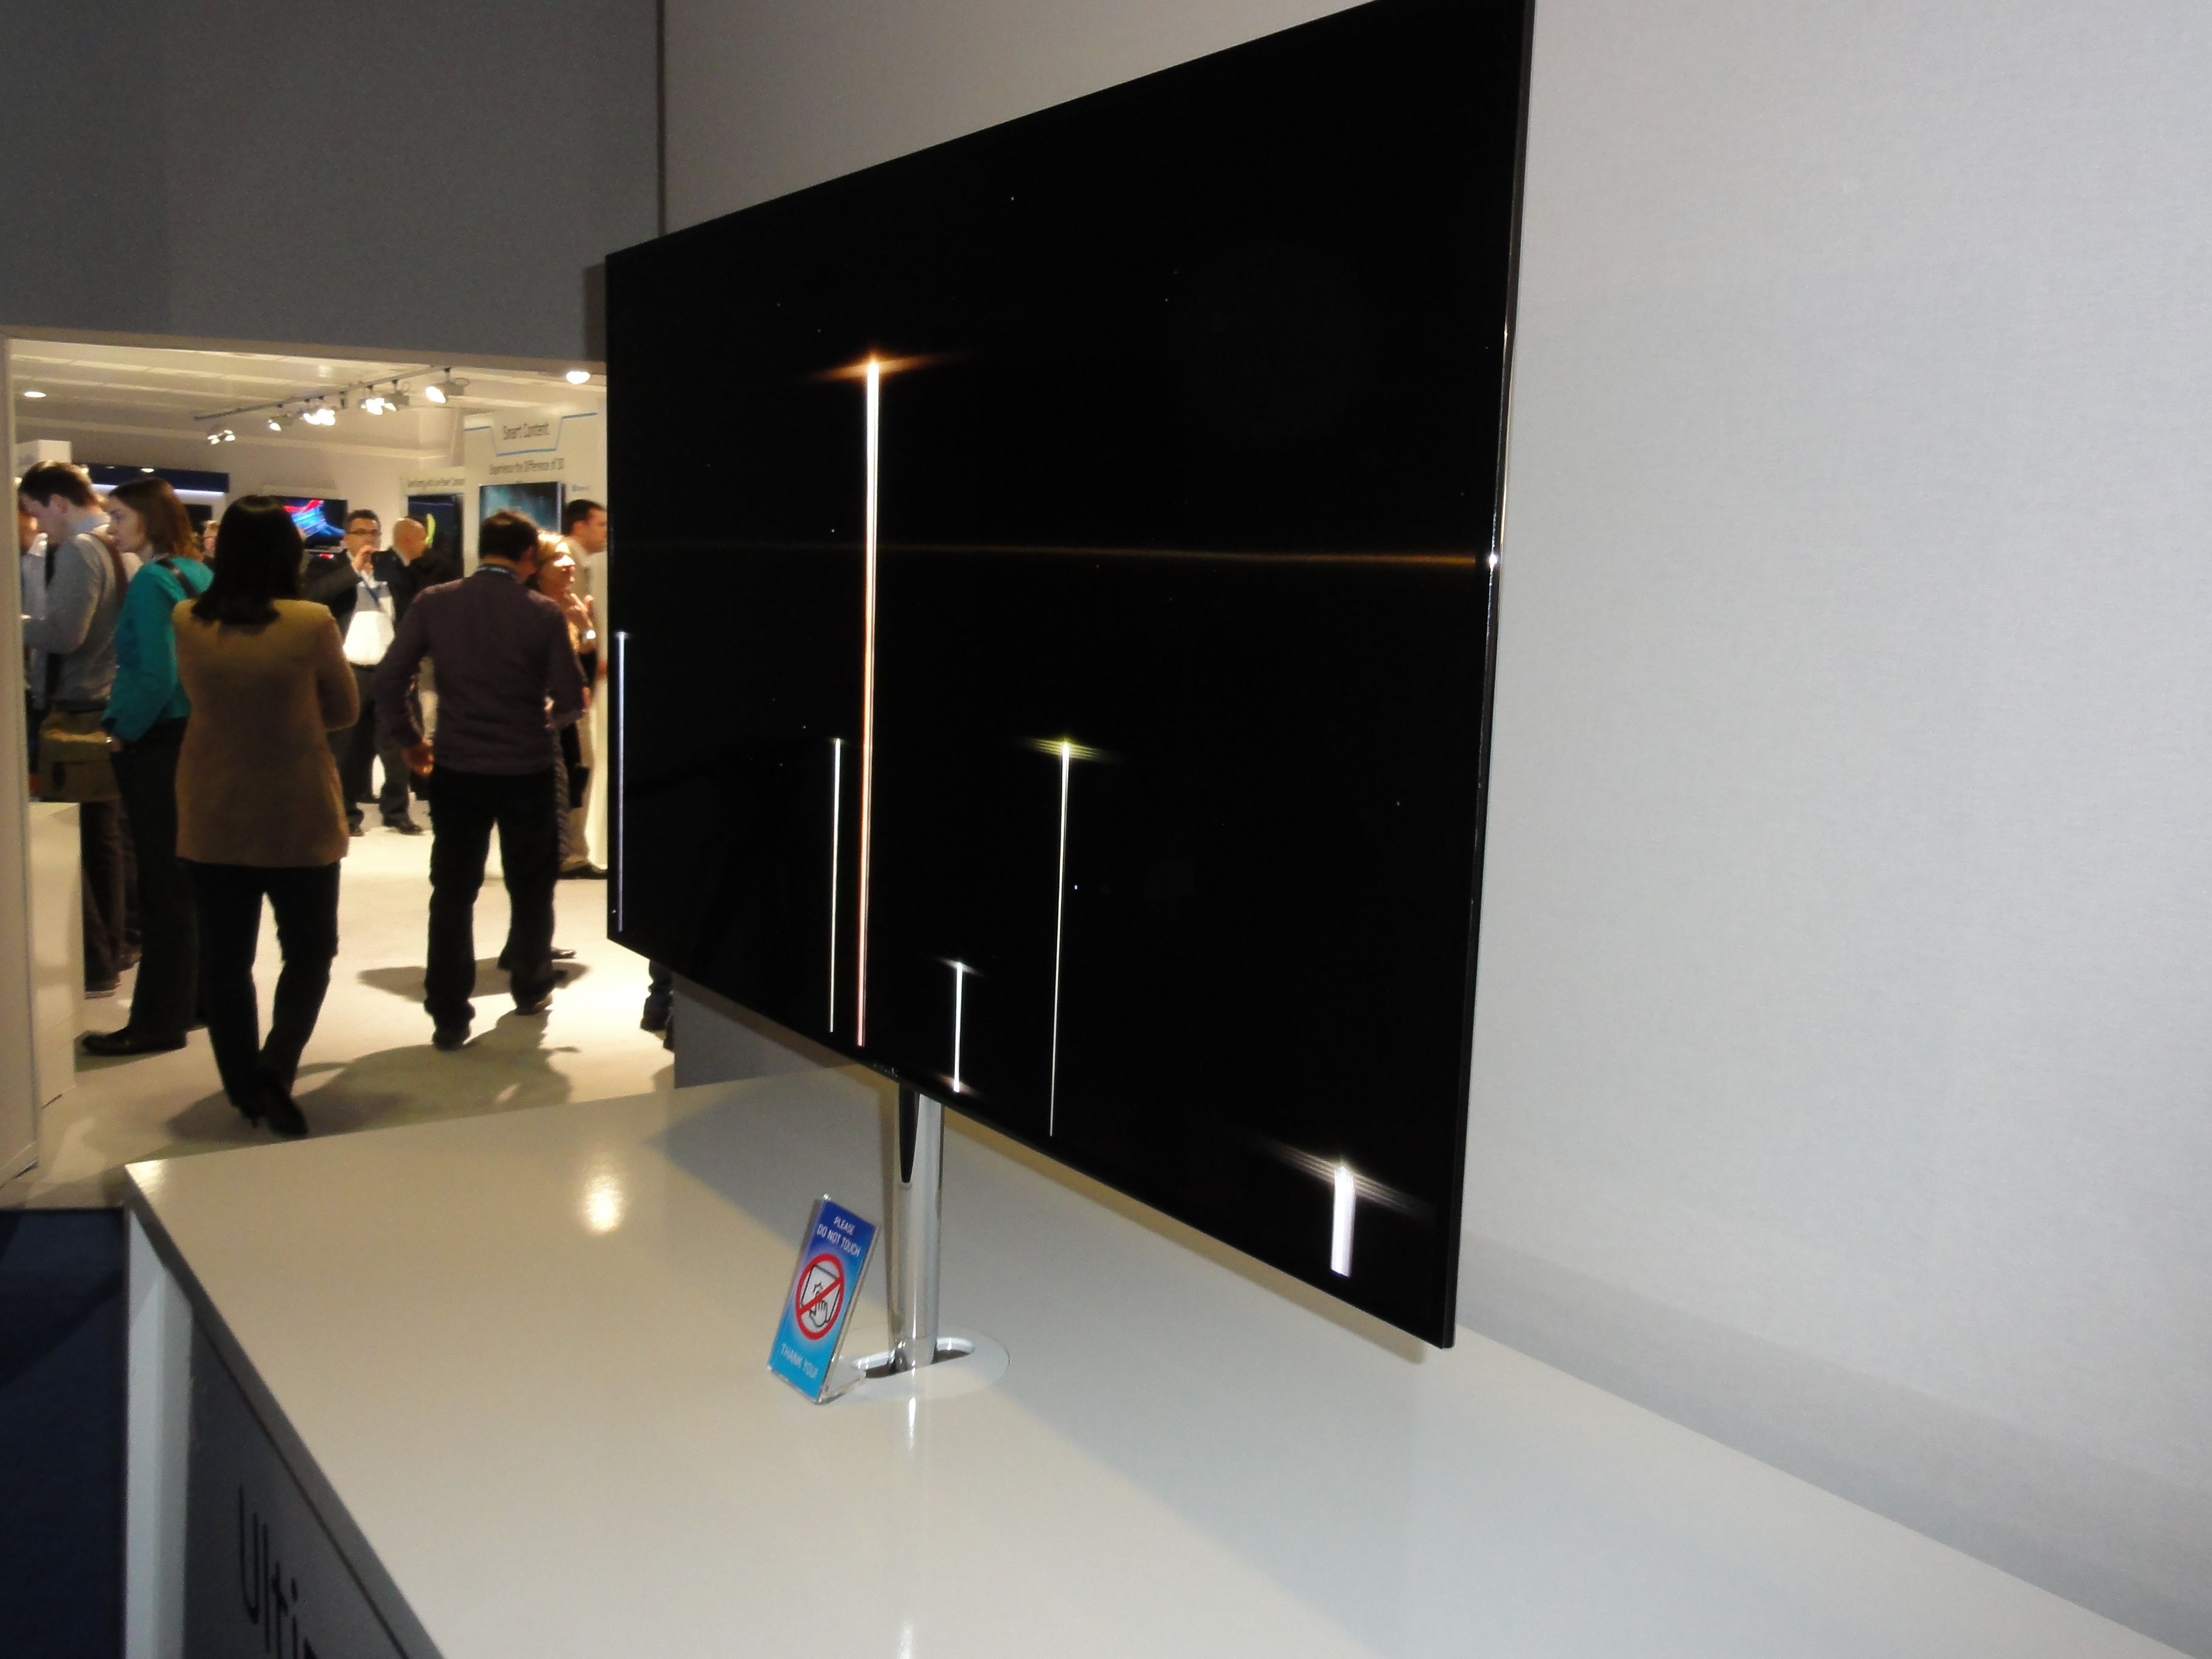 Samsung Forum 2012 presentaa sus teles inteligentes